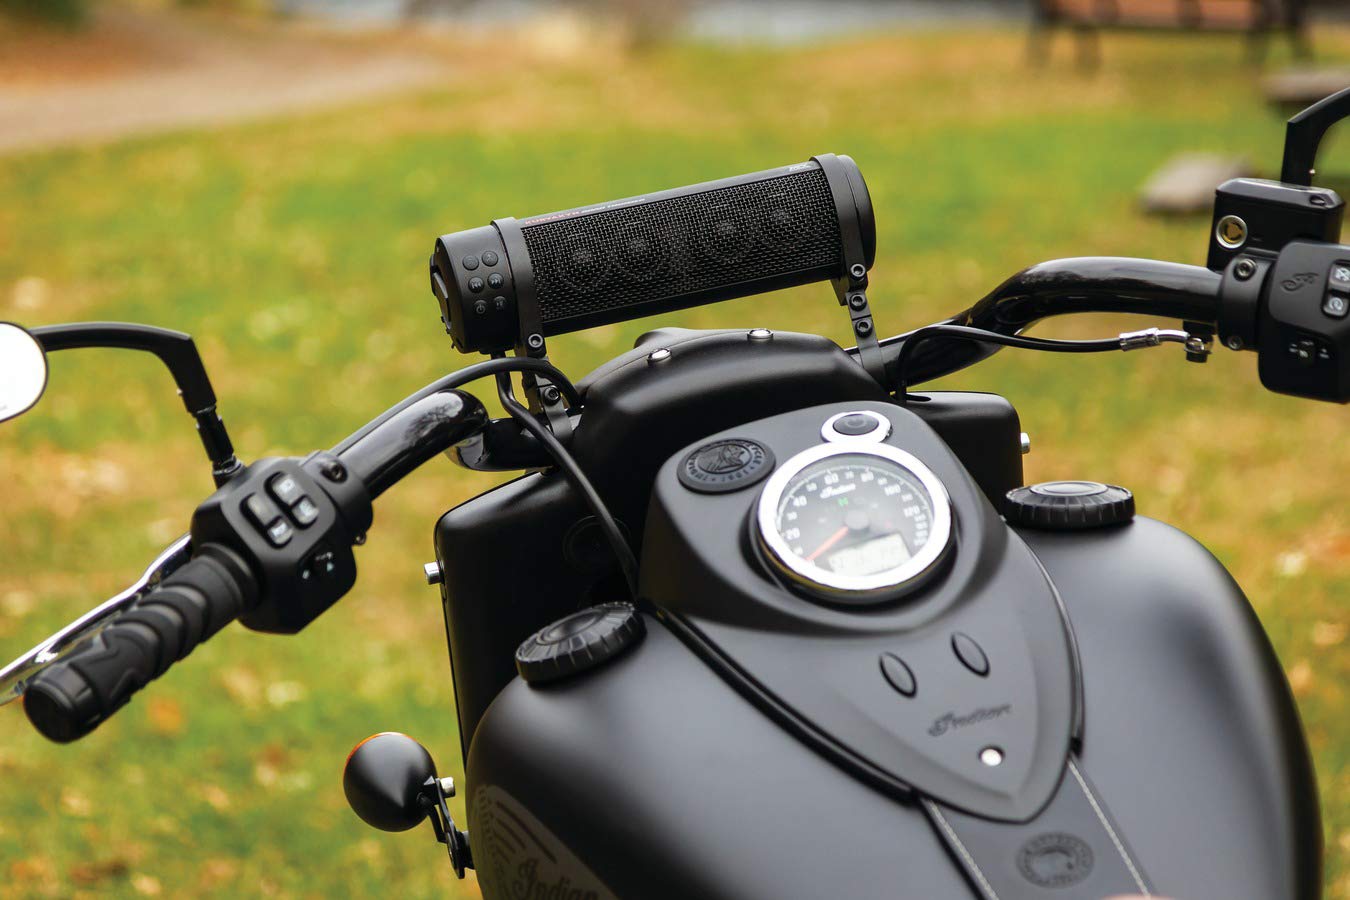 Kuryakyn 2720 MTX Road Thunder Weather Resistant Motorcycle Sound Bar Plus: 300 Watt Handlebar Mounted Audio Speakers with Bluetooth, USB Power Charger, Satin Black